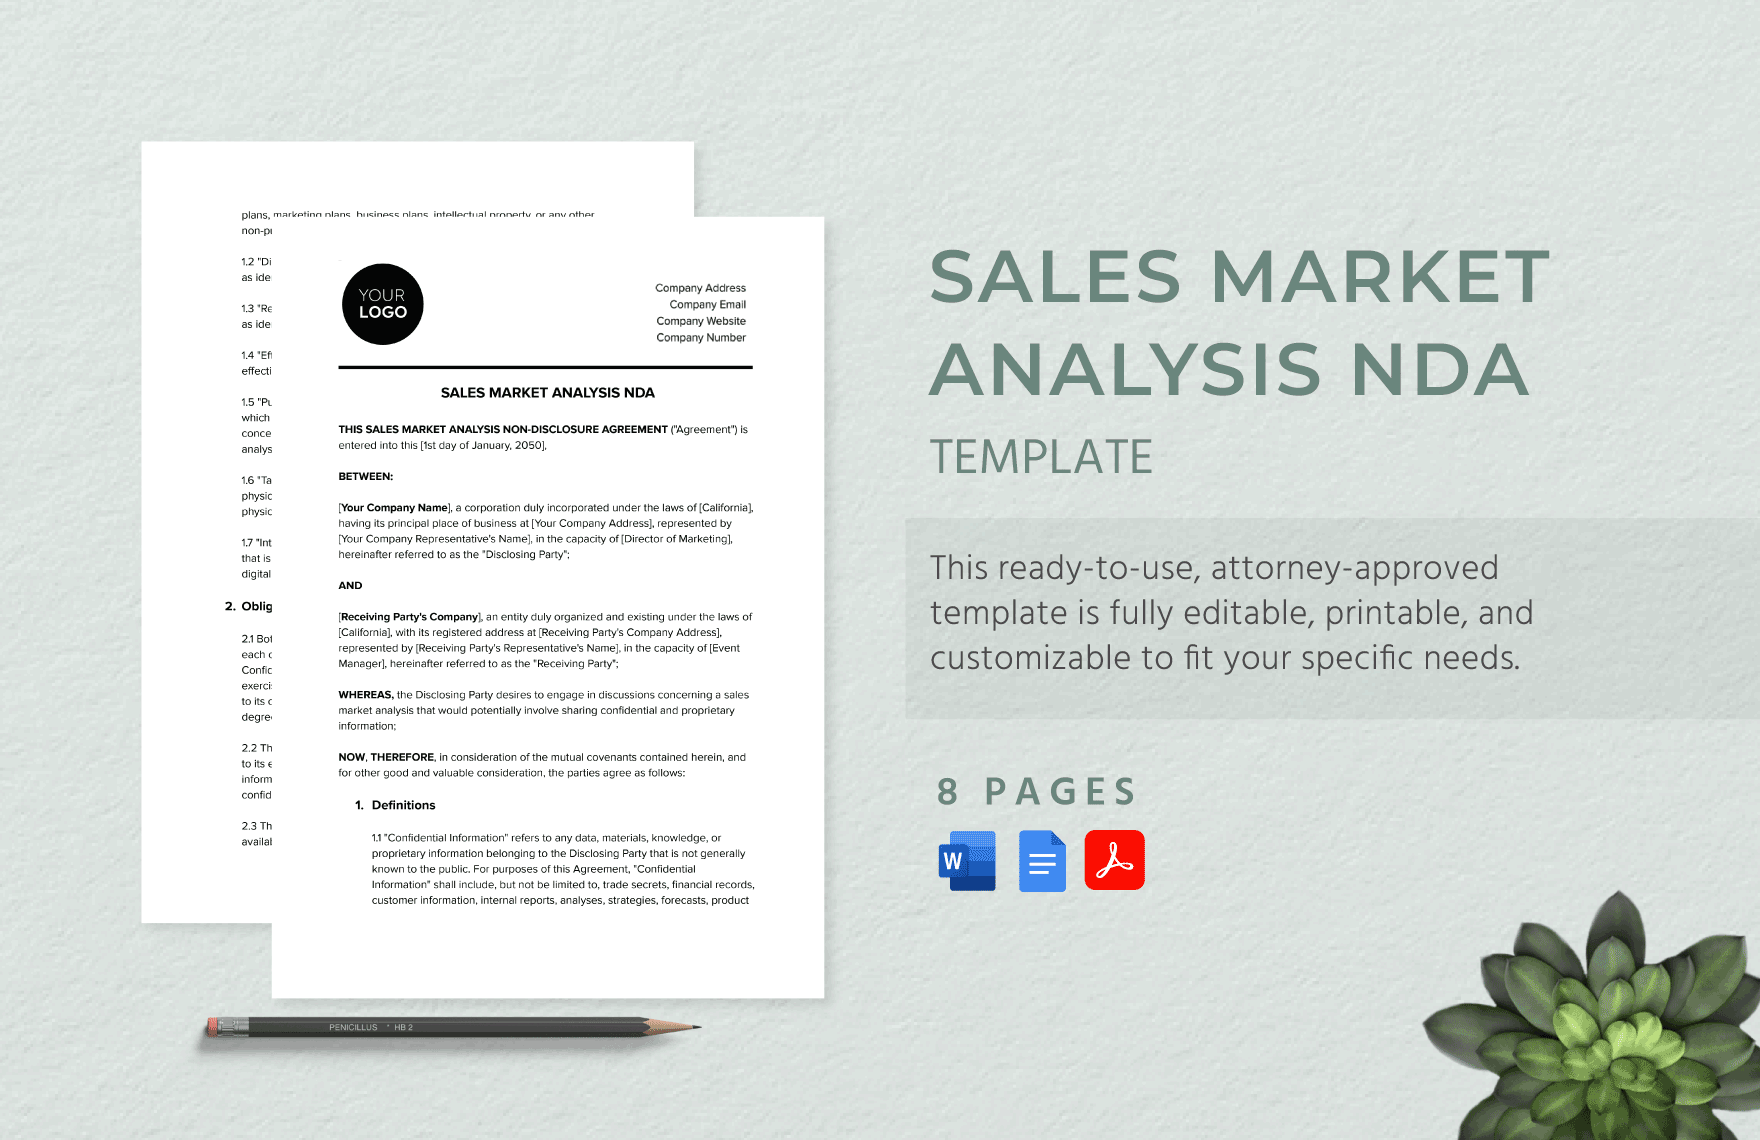 Sales Market Analysis NDA Template